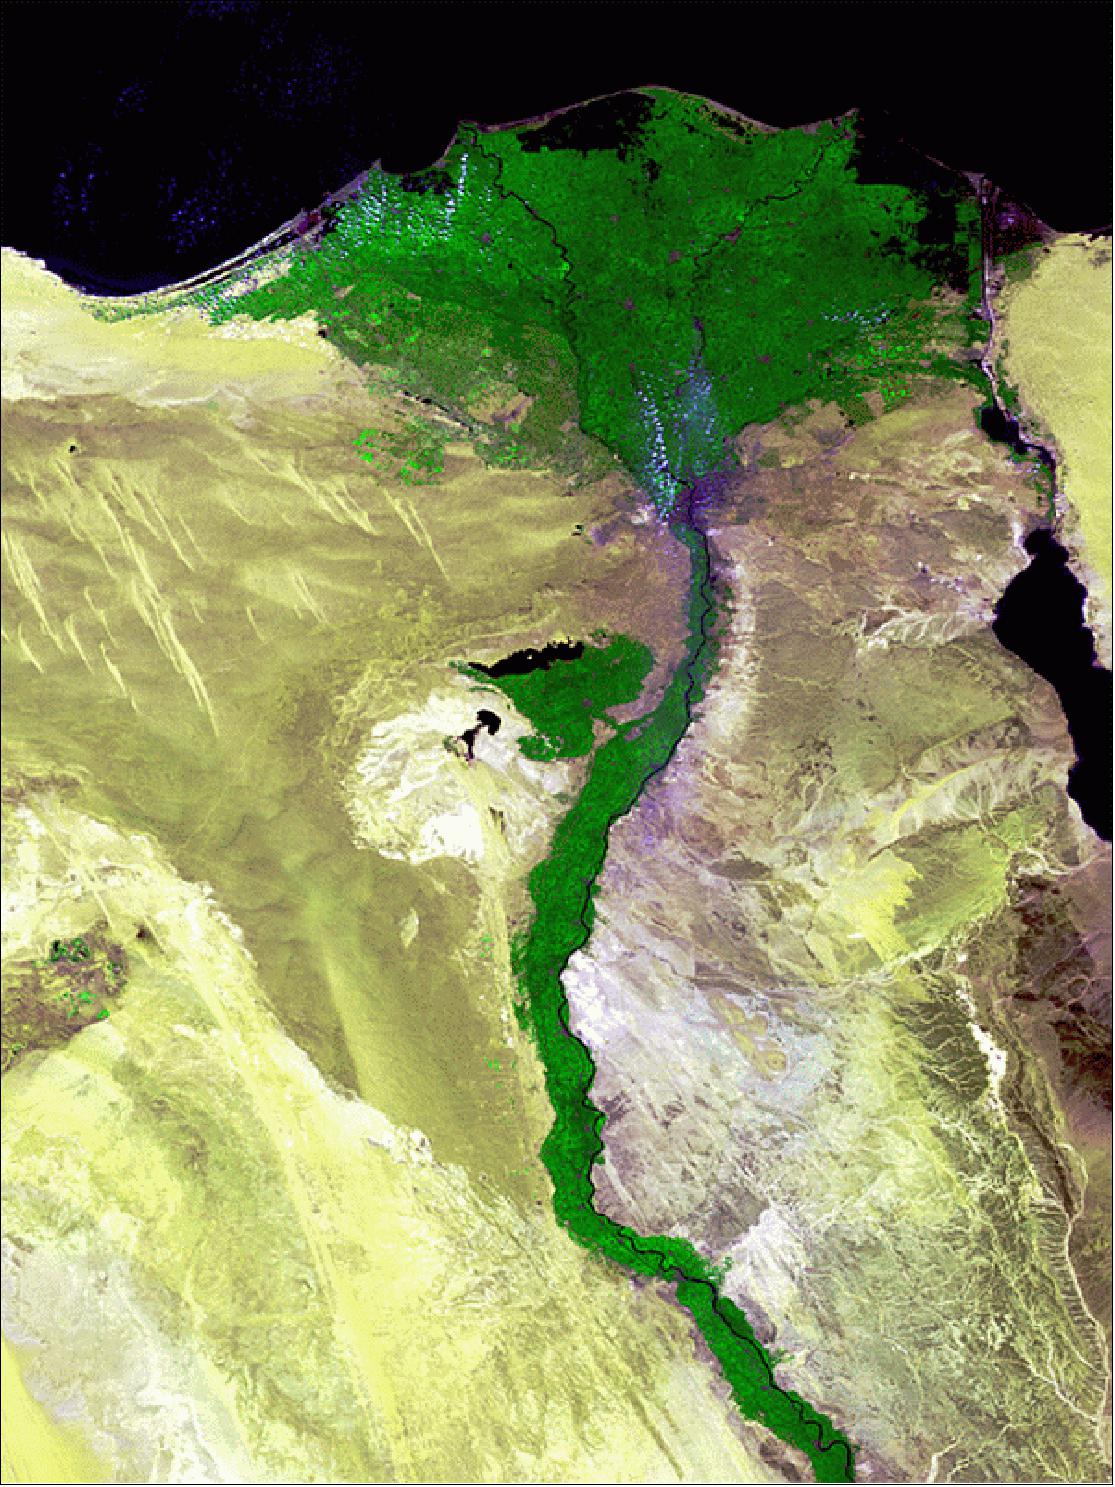 Figure 61: The Nile Delta in Egypt, acquired by PROBA-V on March 24, 2014 (image credit: ESA, VITO)